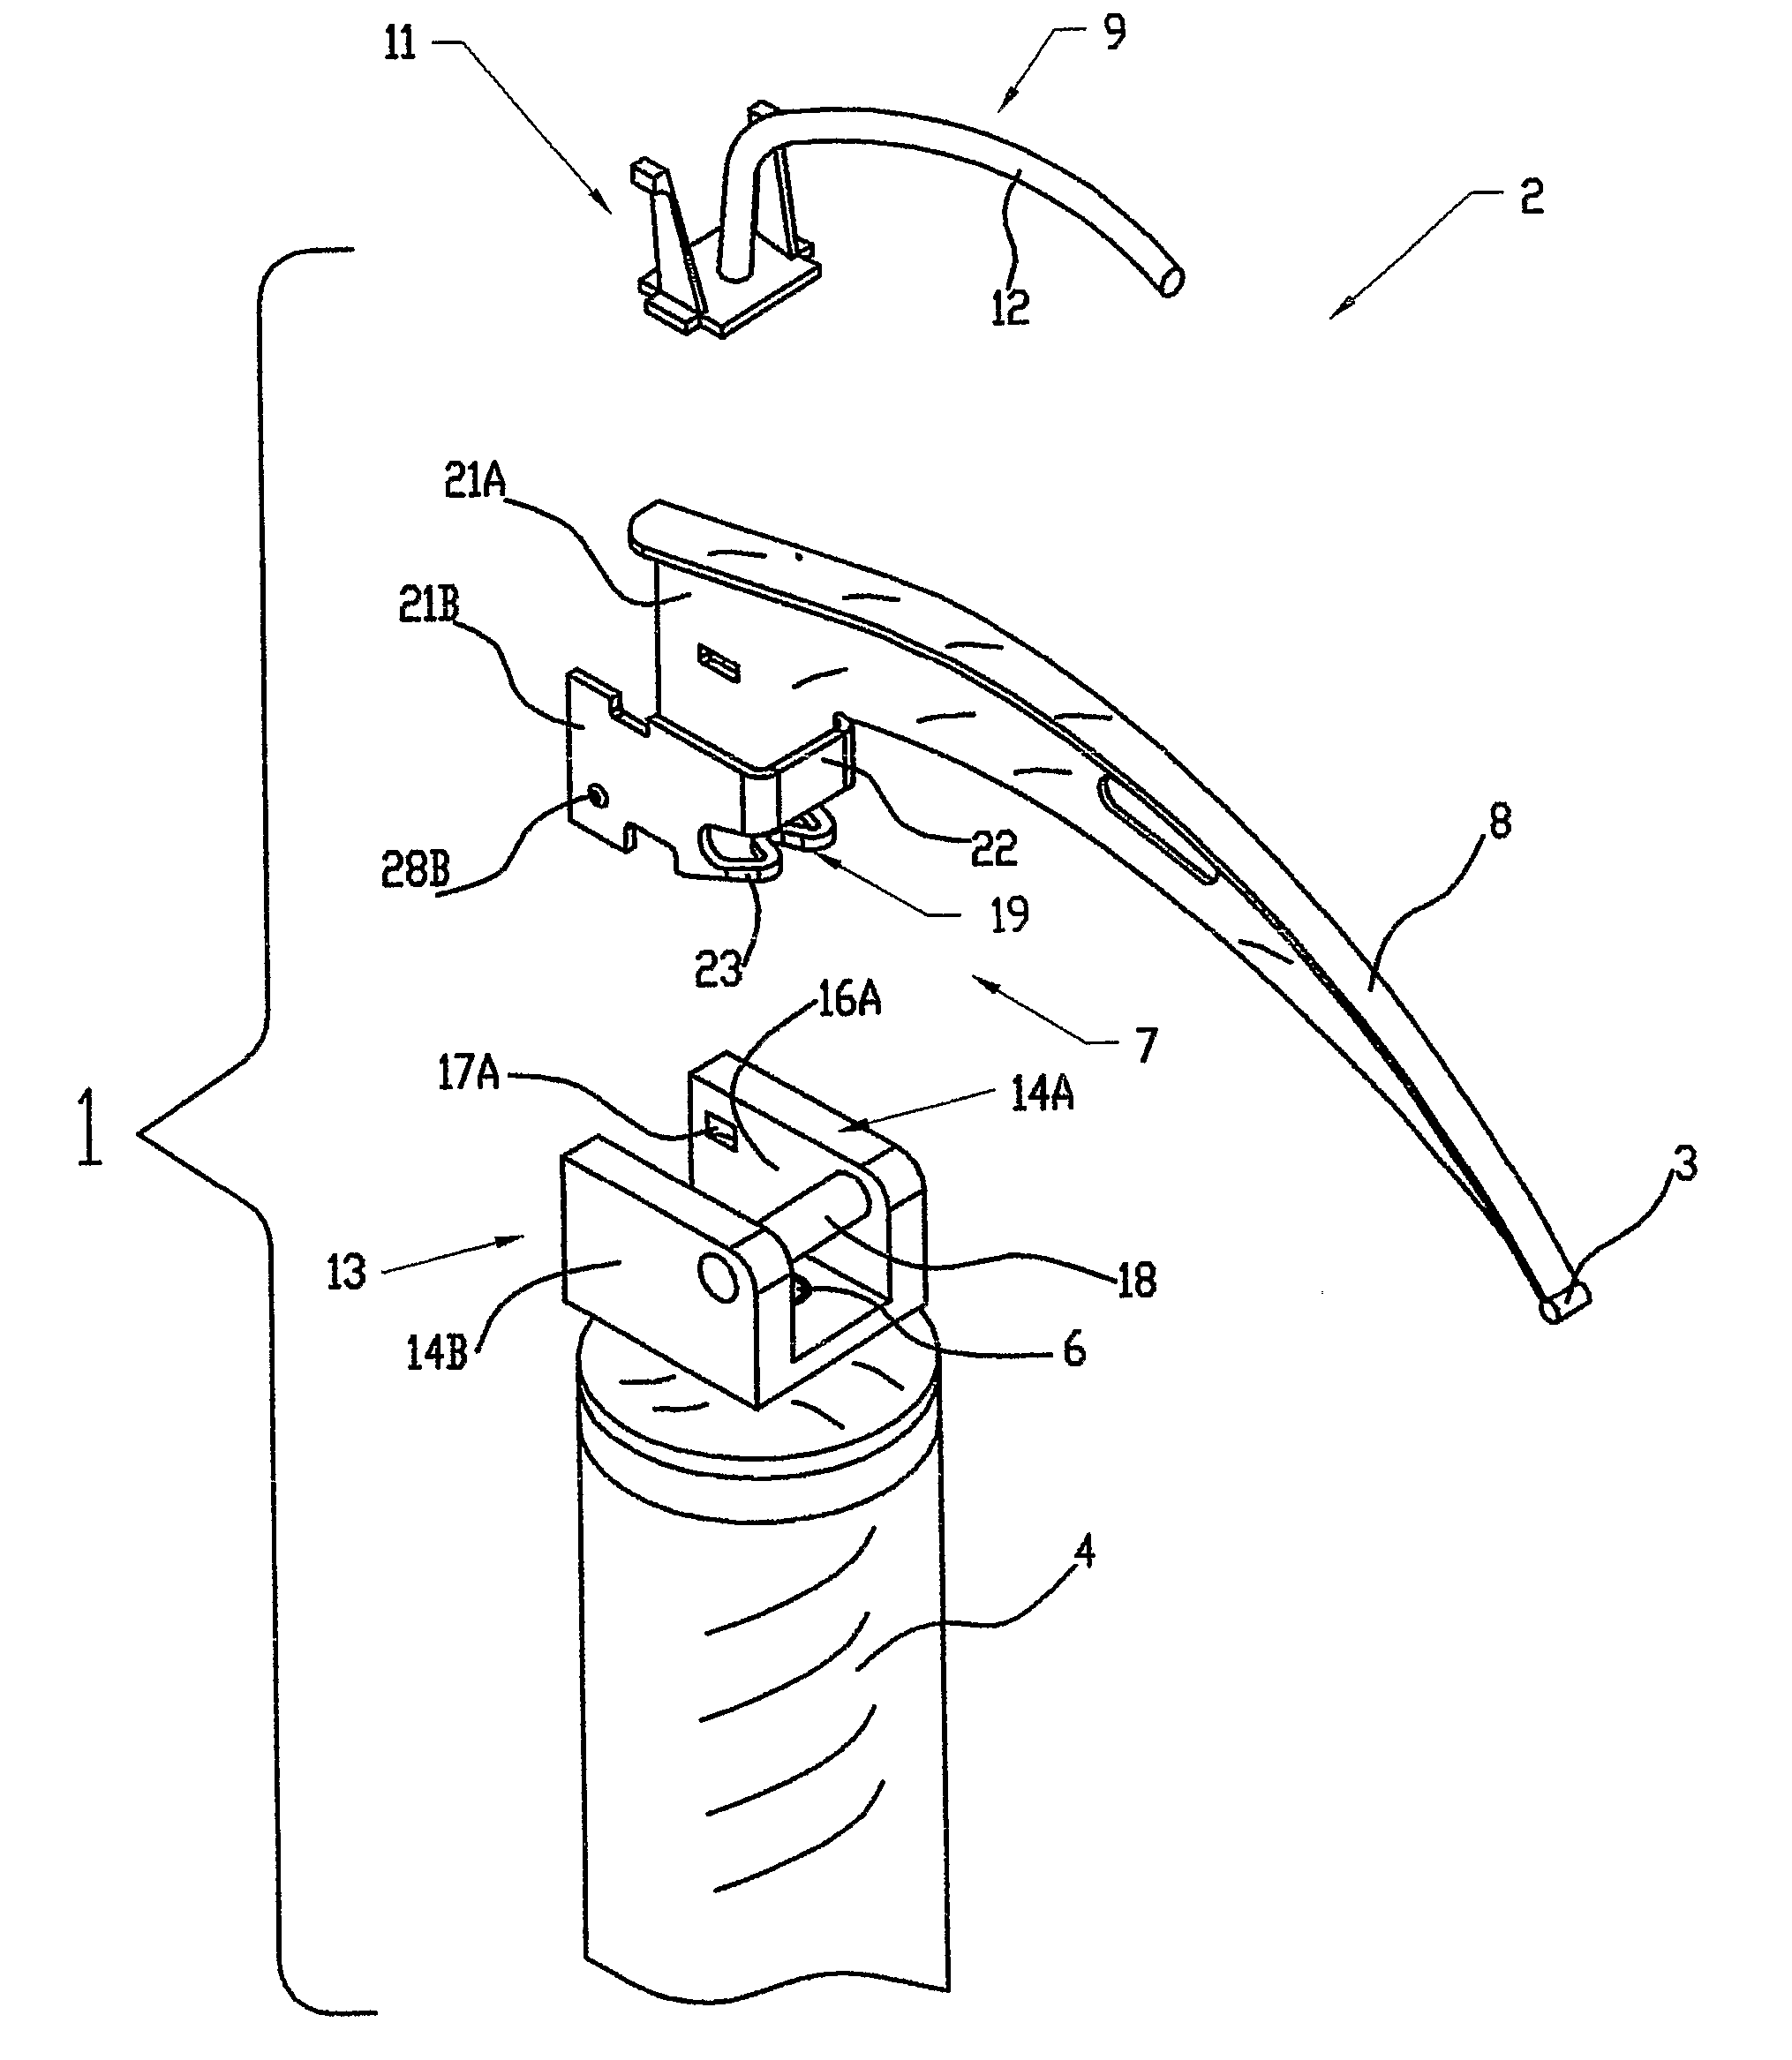 Metal laryngoscope blade